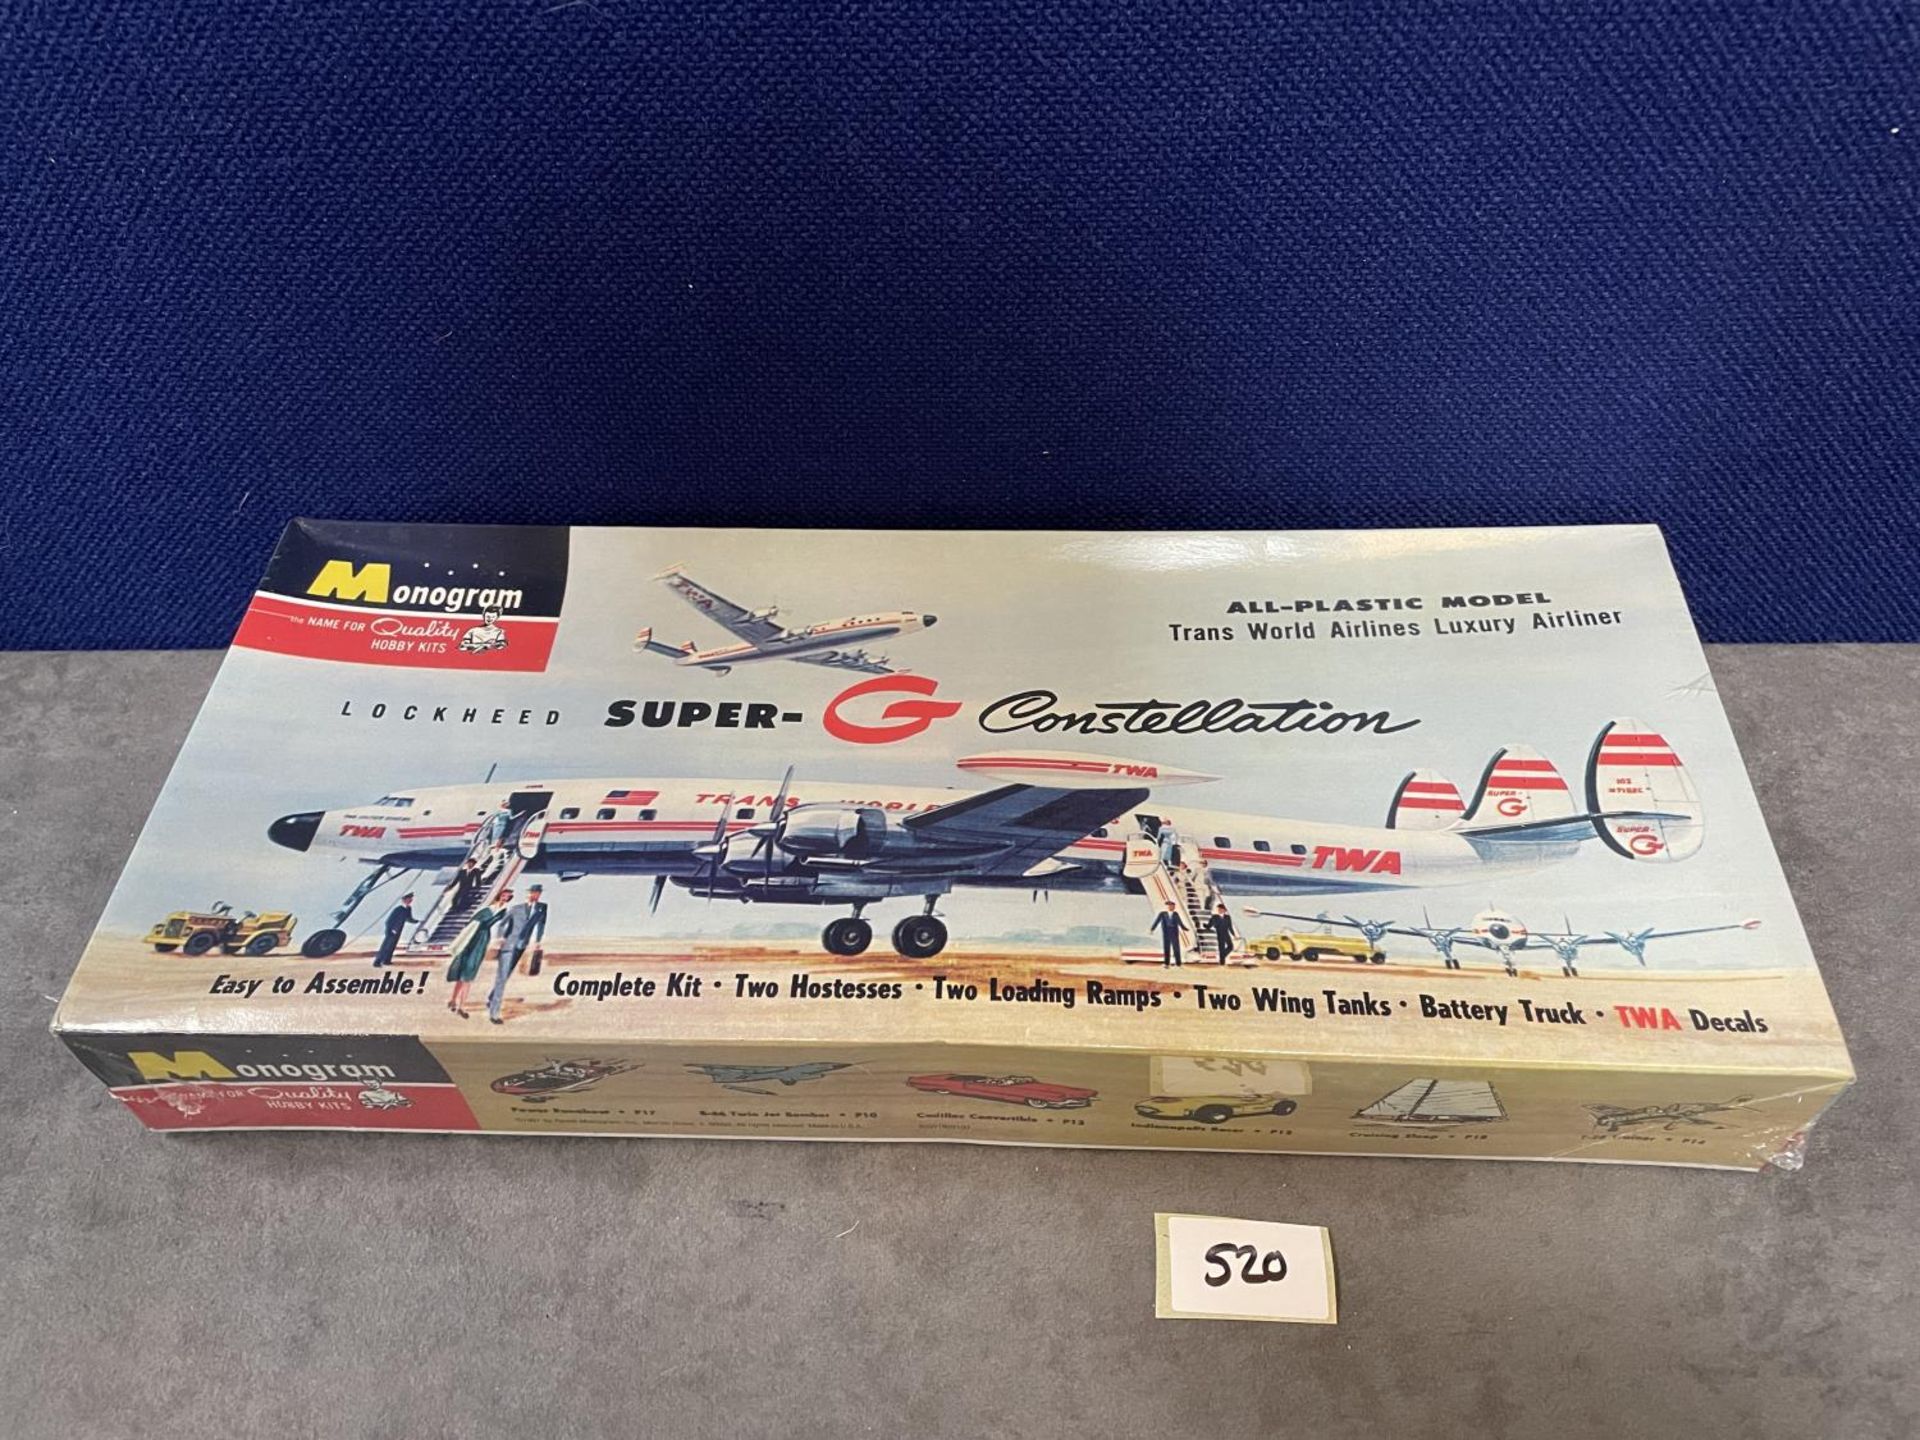 Monogram Hobby Kits No. 85-0019 Lockheed Super G Constellation Trans World Airlines Luxury